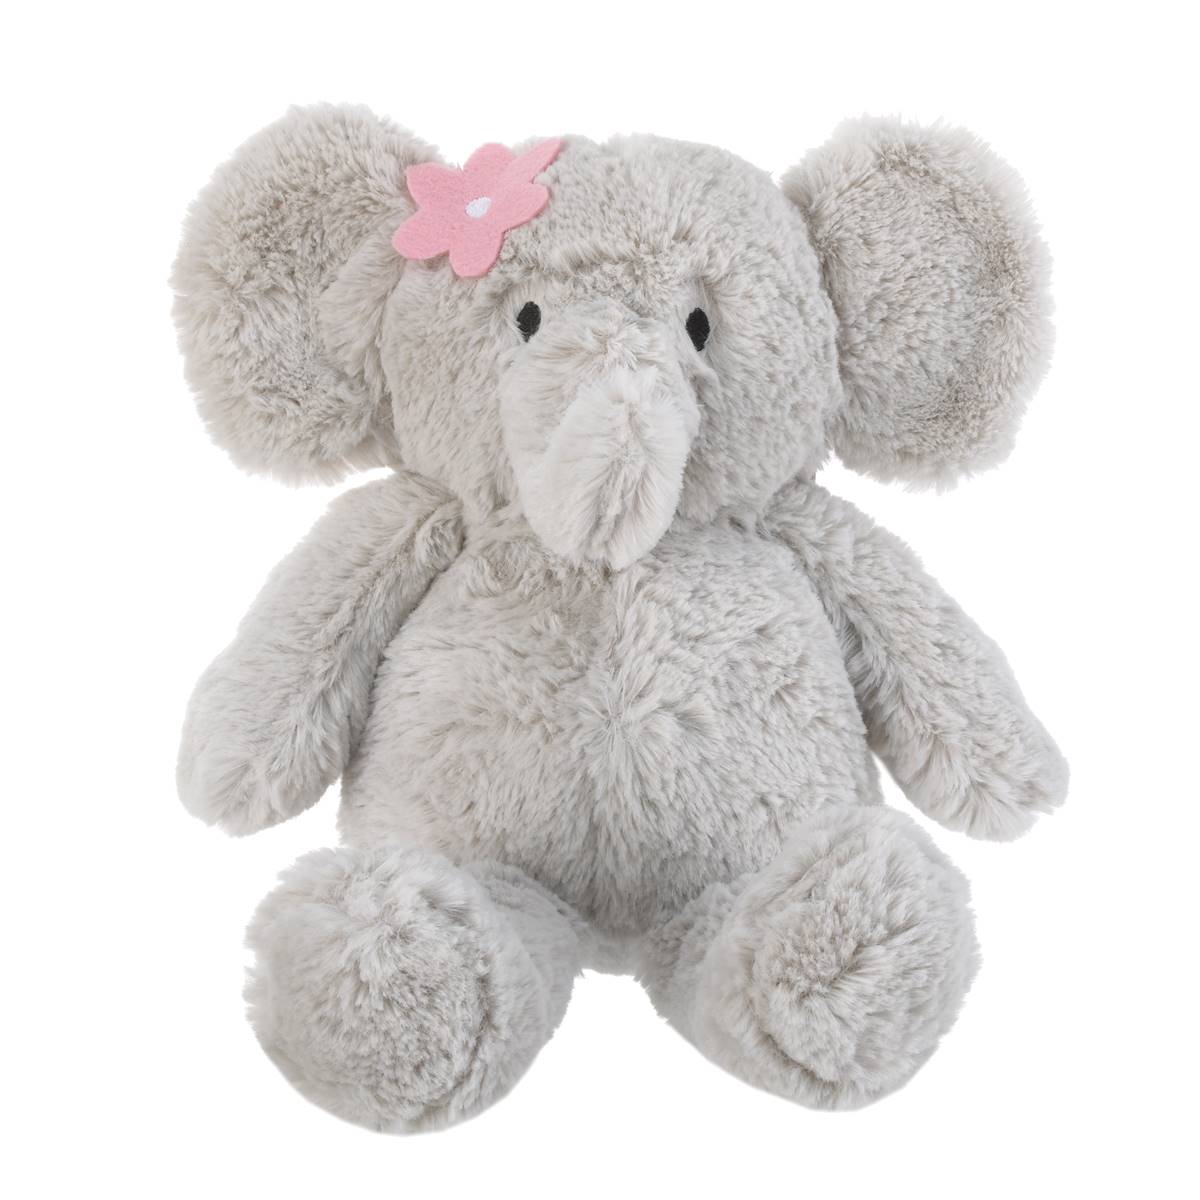 Carters(R) Floral Elephant Grey Plush Stuffed Animal